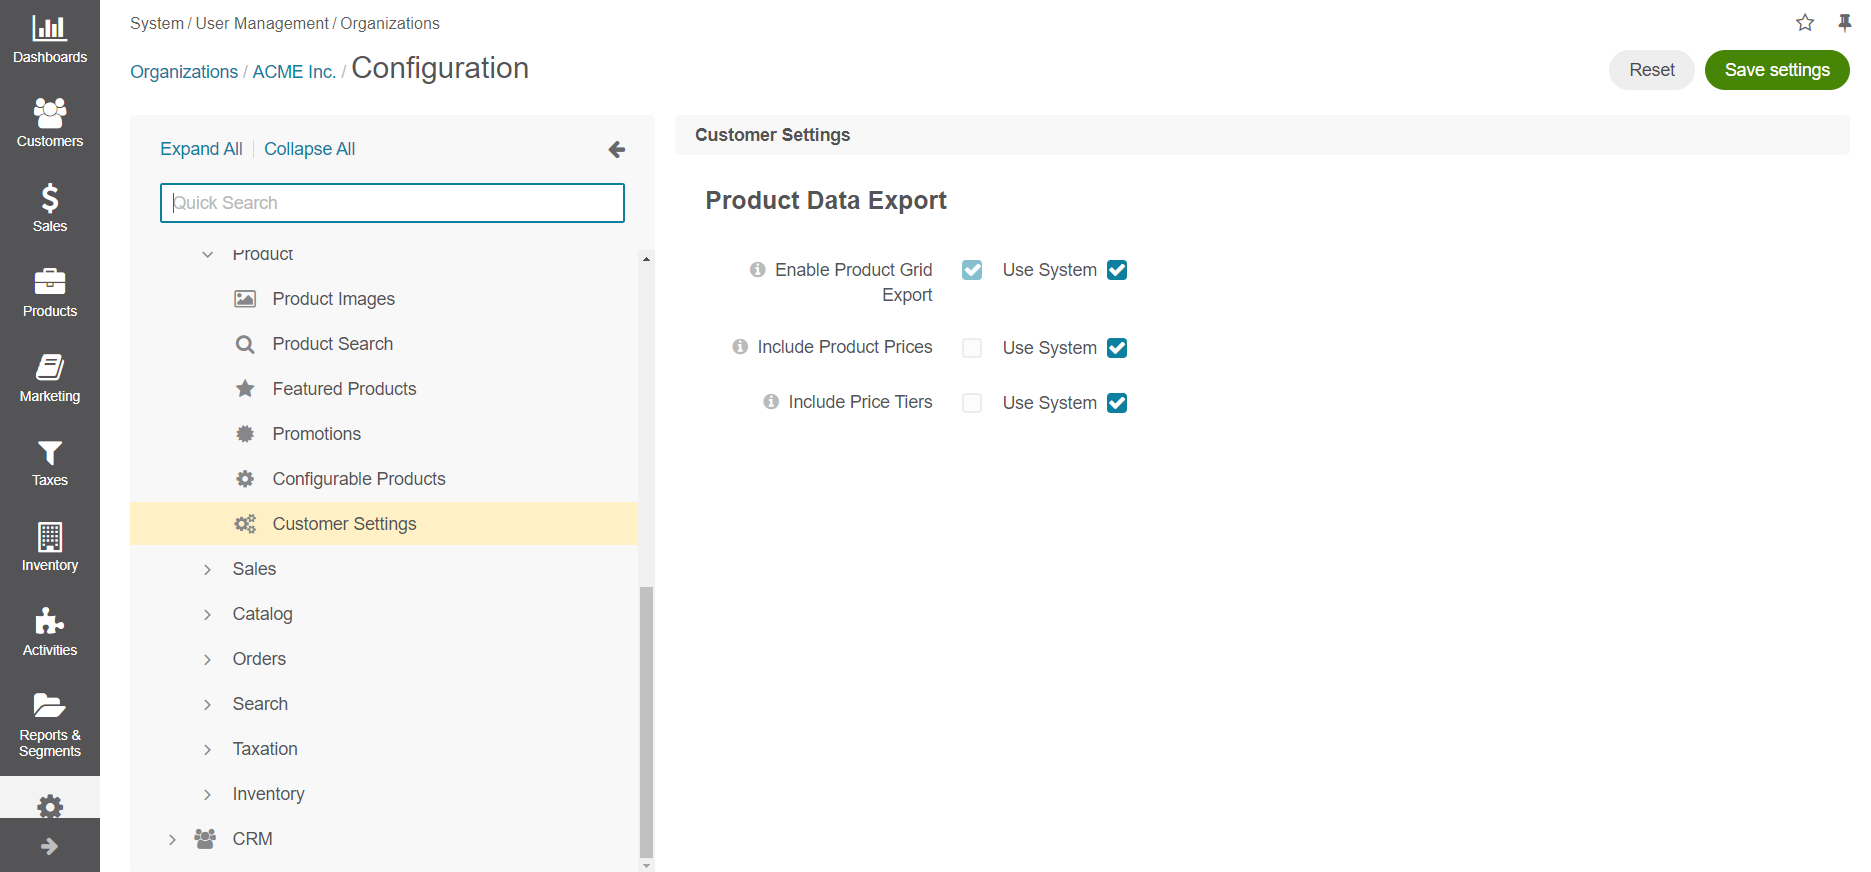 Product data export configuration options on organization level